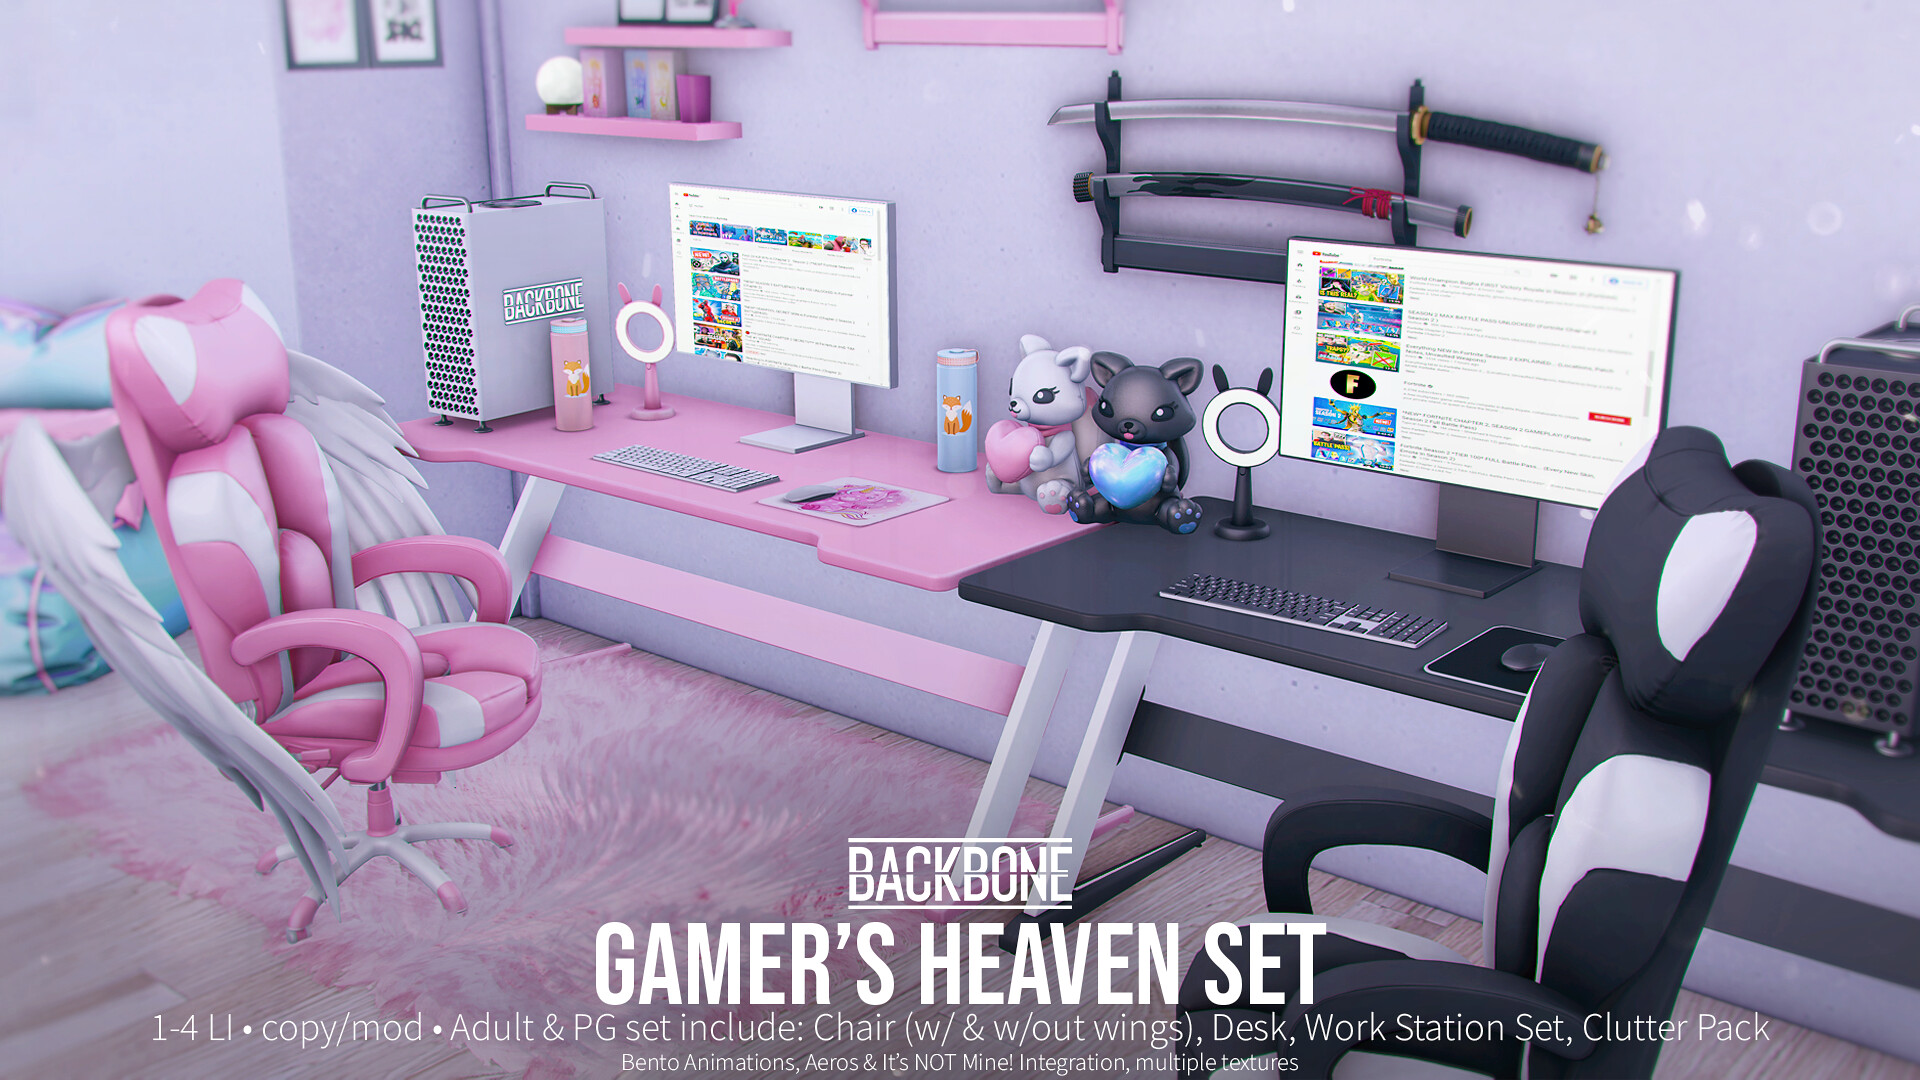 BackBone – Gamer’s Heaven Set